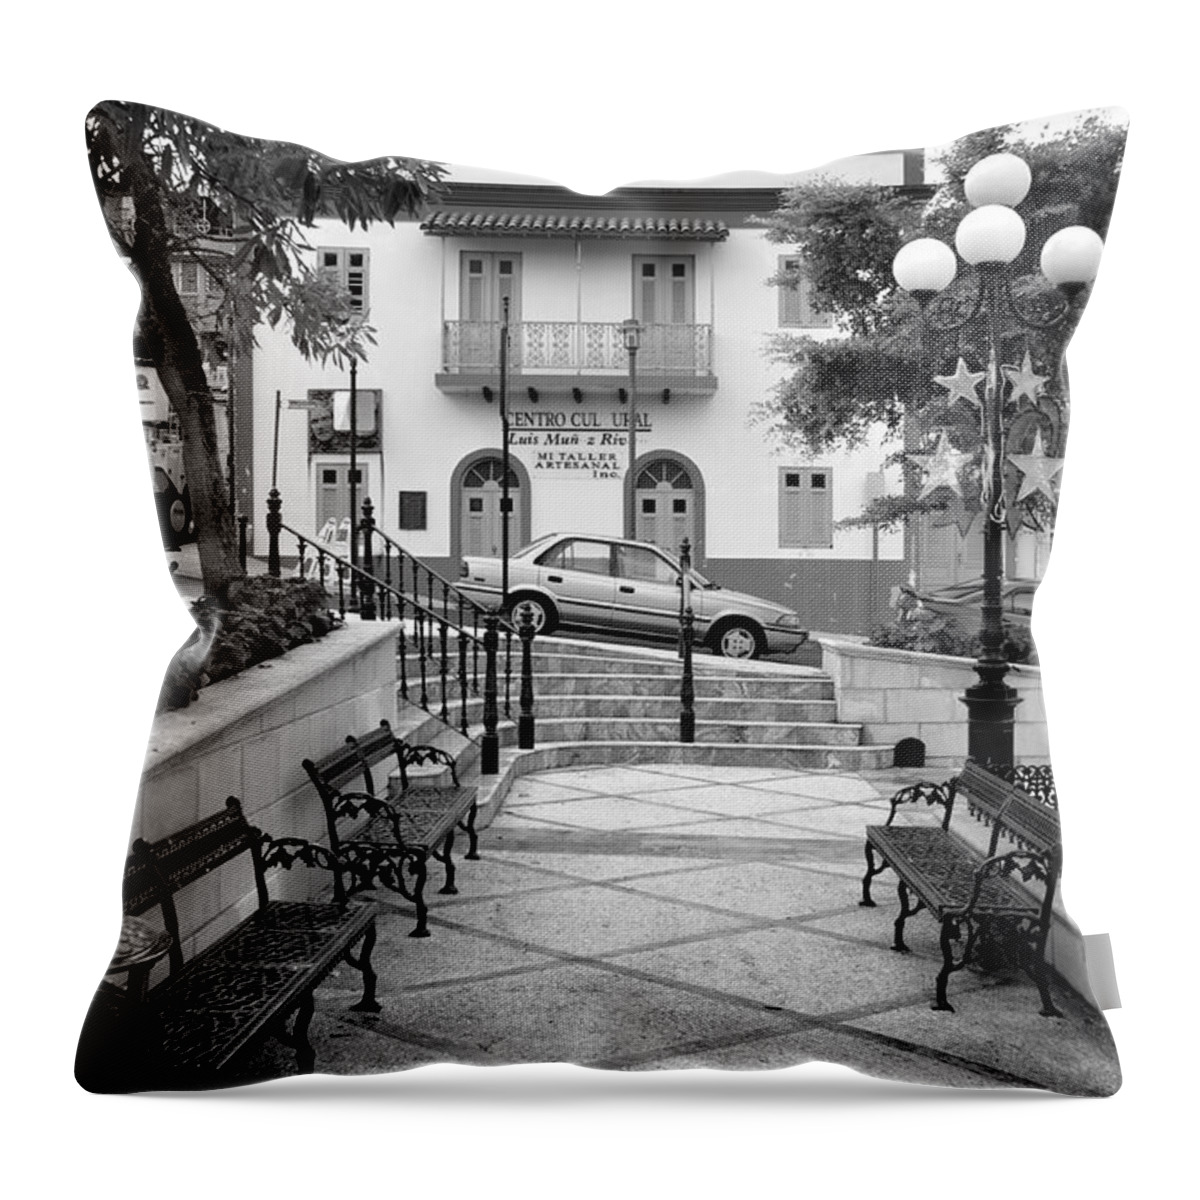  Throw Pillow featuring the photograph Barranquitas 5632bw by Ricardo J Ruiz de Porras